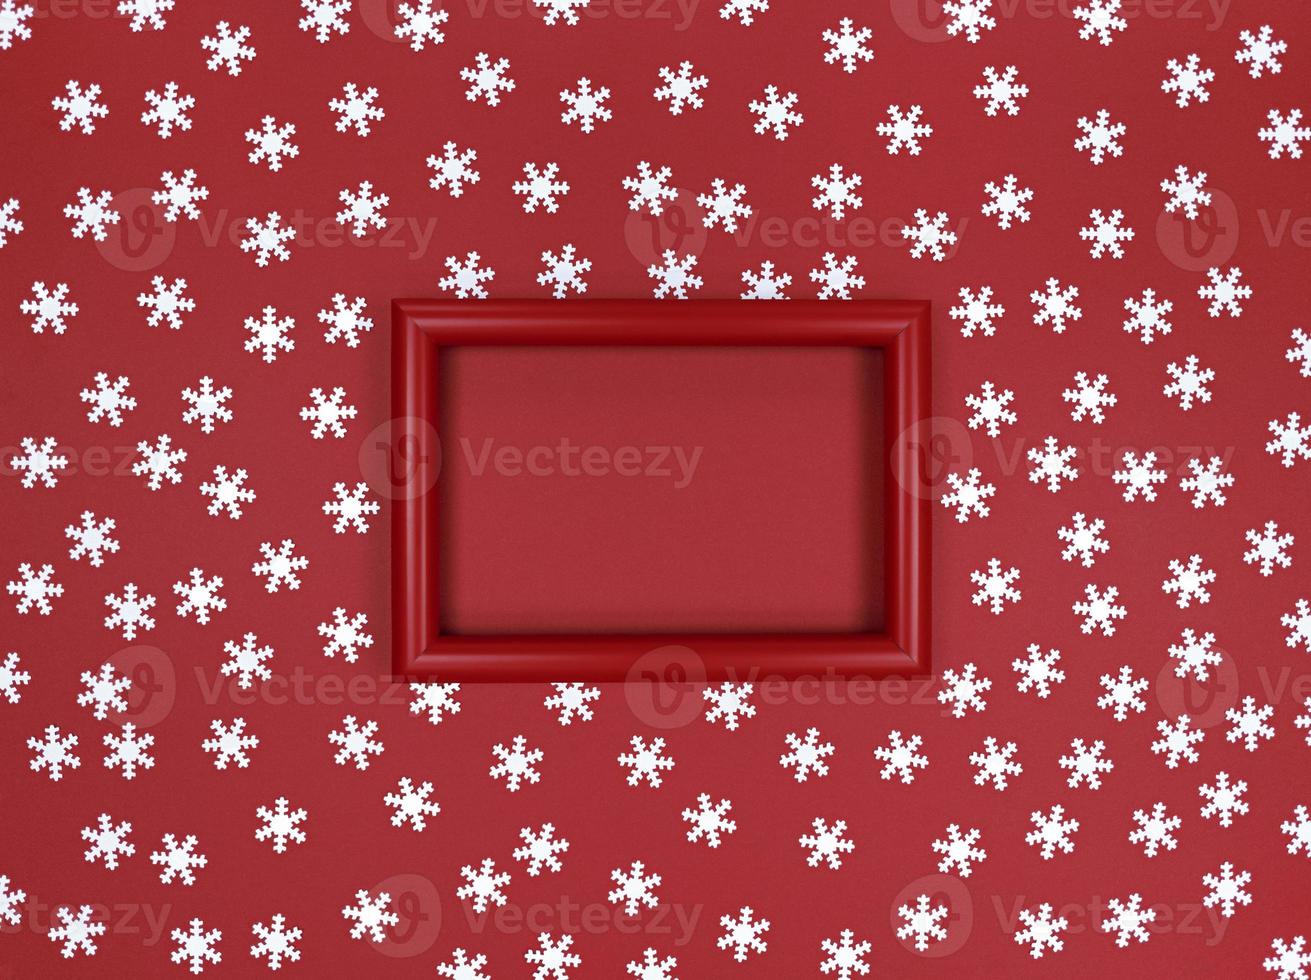 frame en sneeuwvlokken confetti op een rode achtergrond. foto